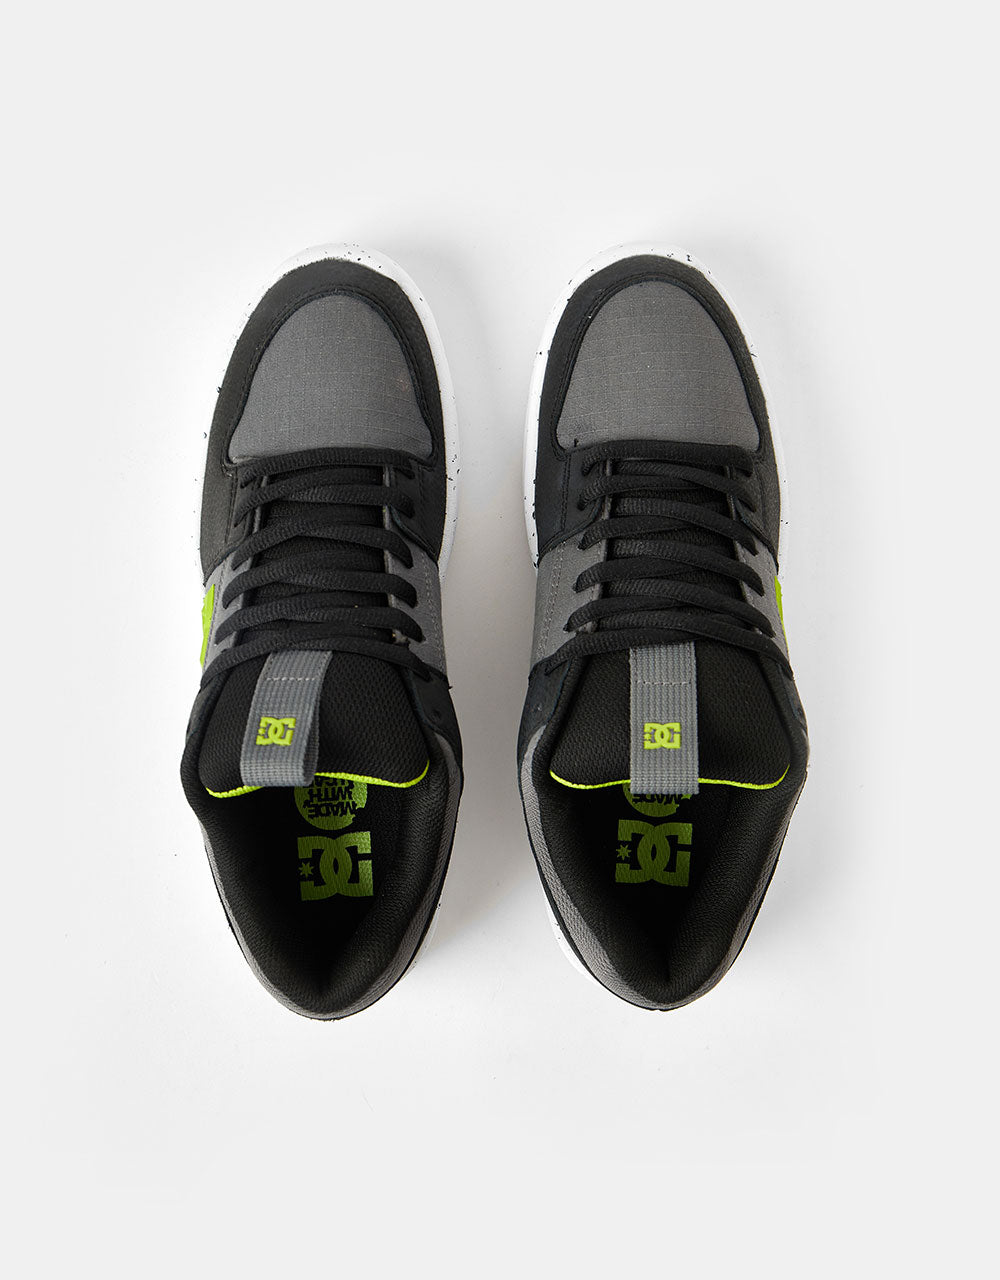 DC Lynx Zero Waste Skate Shoes - Black/Grey/Green